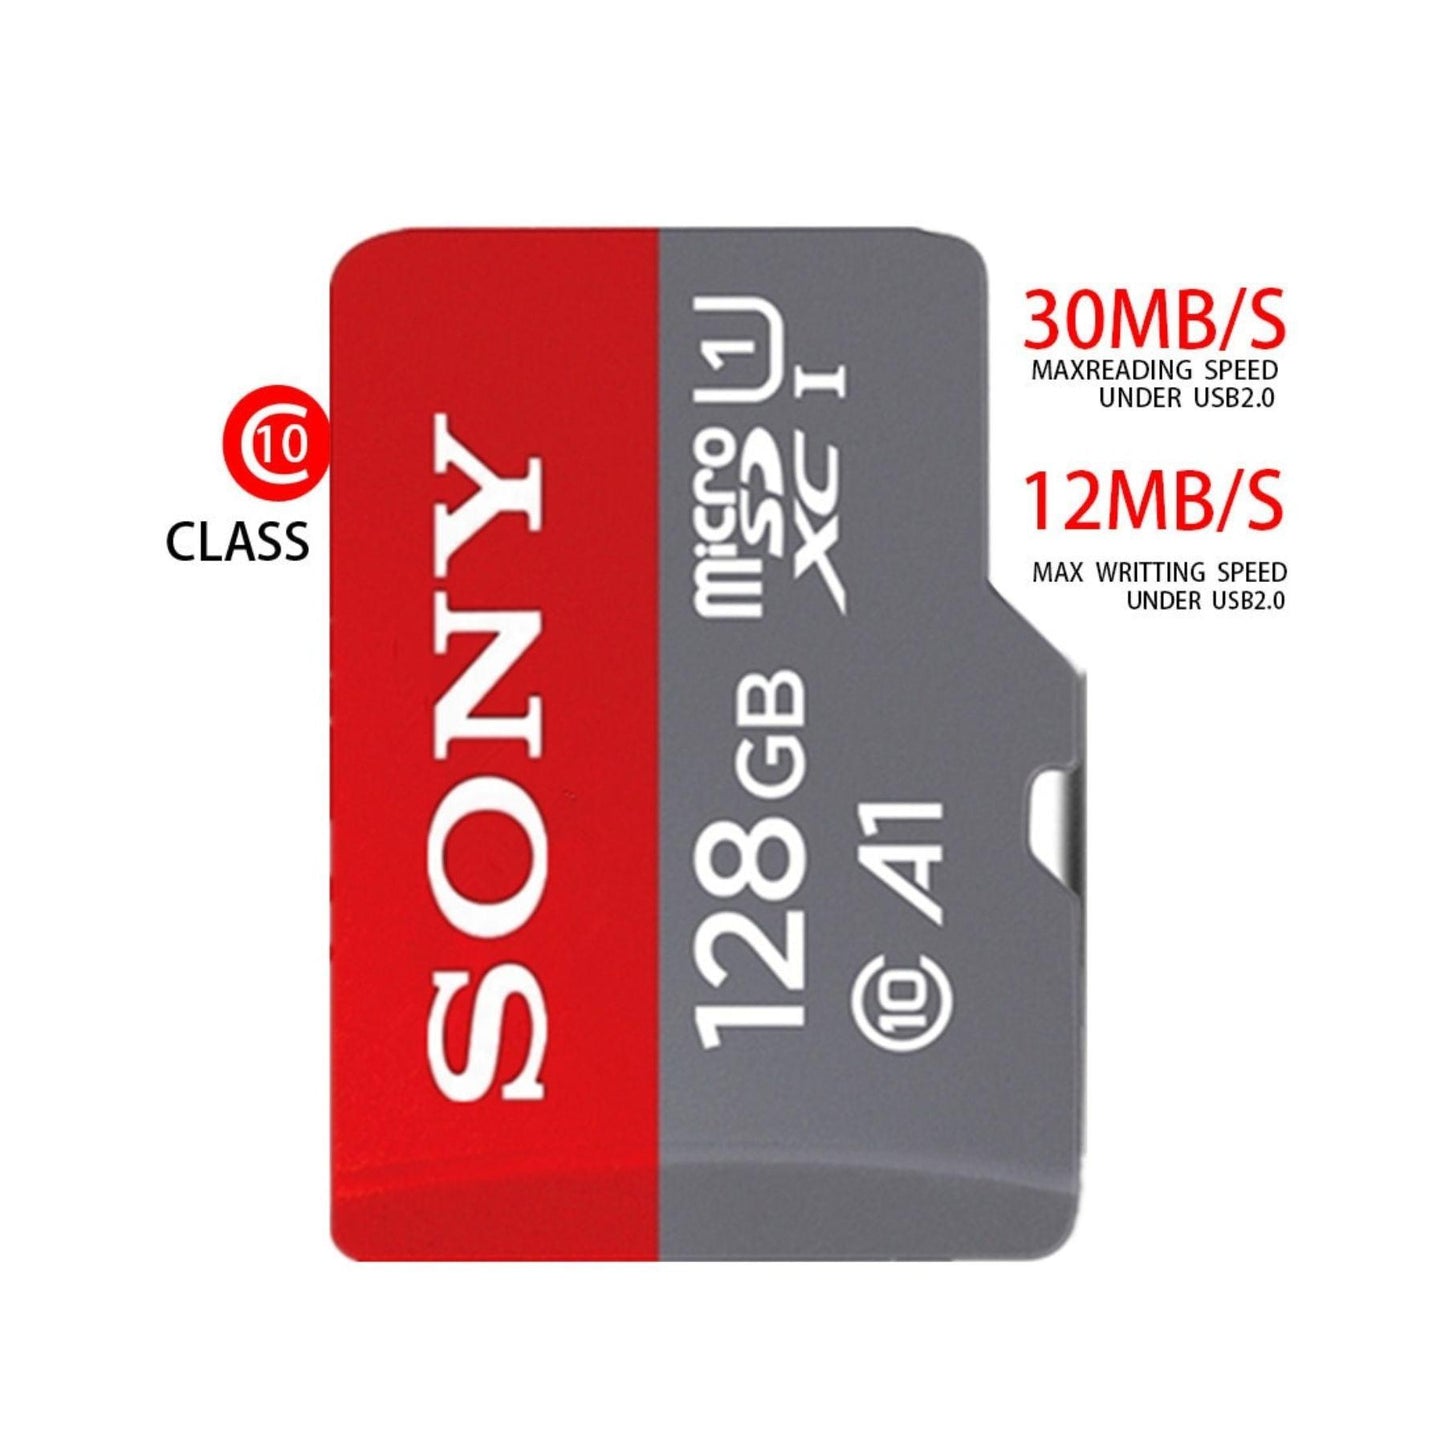 Memoria Micro SD 1TB SONY - AudioPlanet